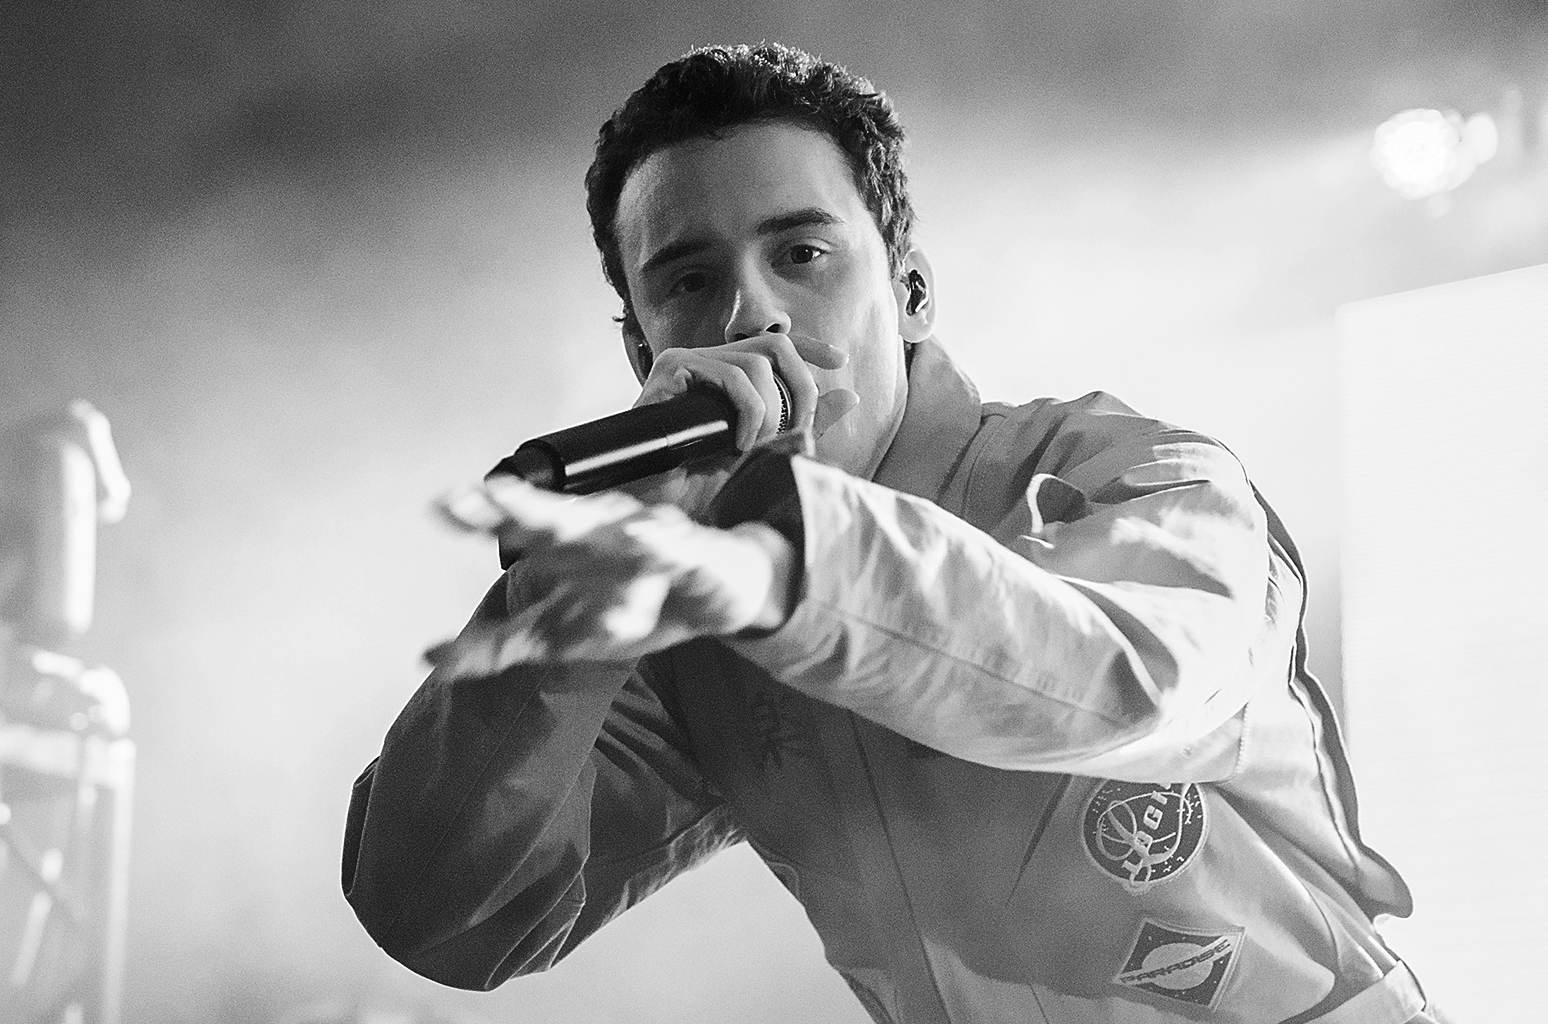 Logic Drops New Music Video